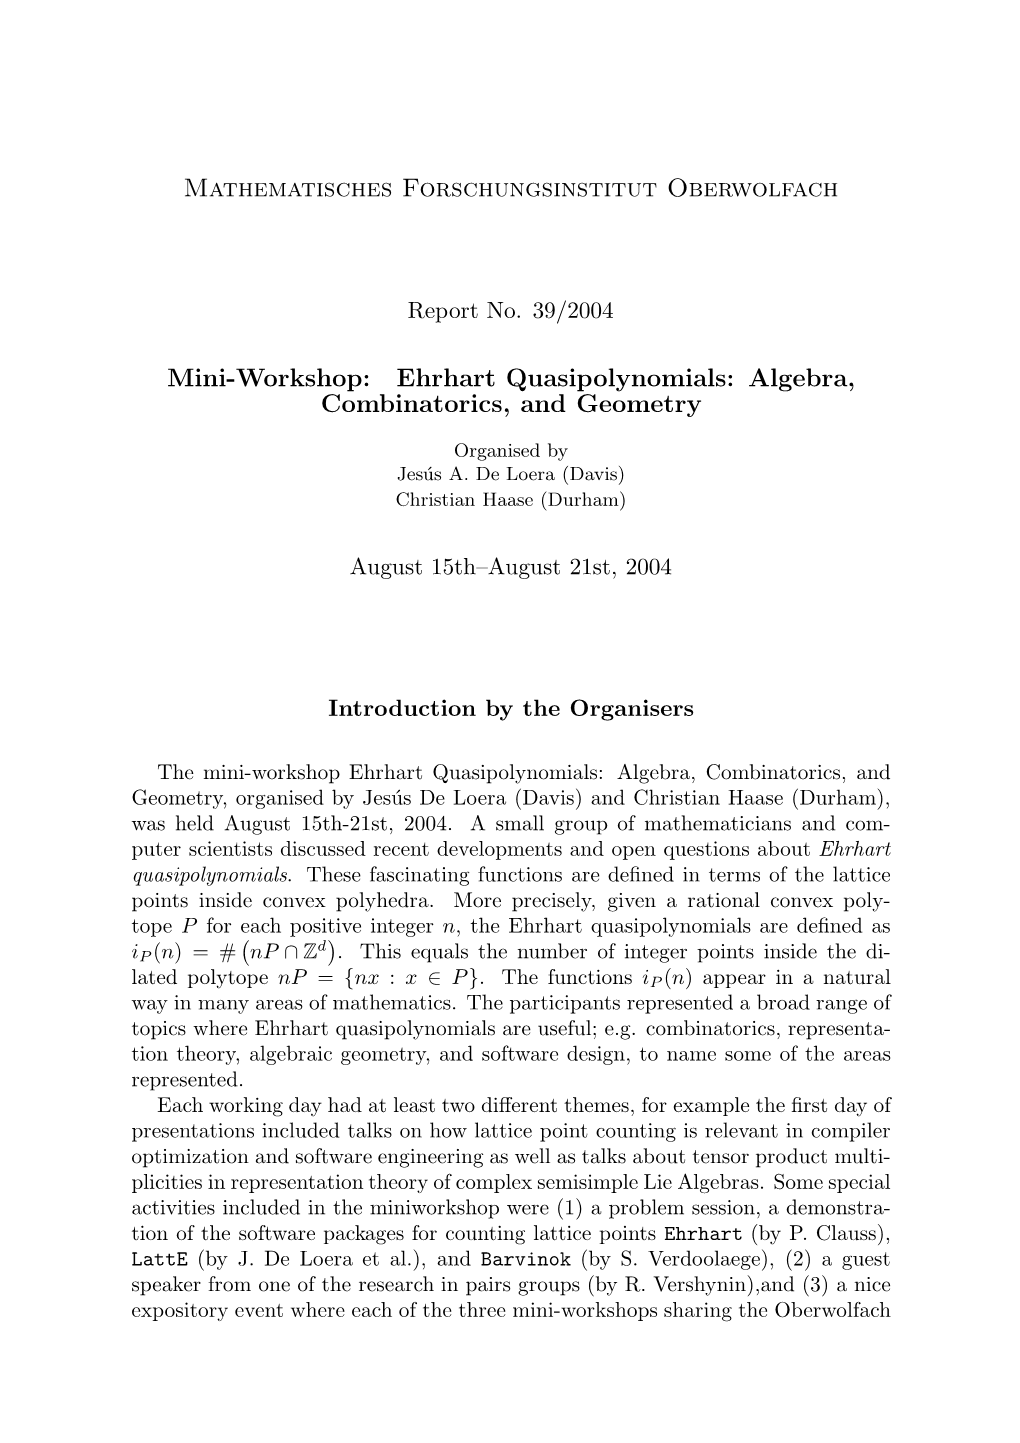 Ehrhart Quasipolynomials: Algebra, Combinatorics, and Geometry